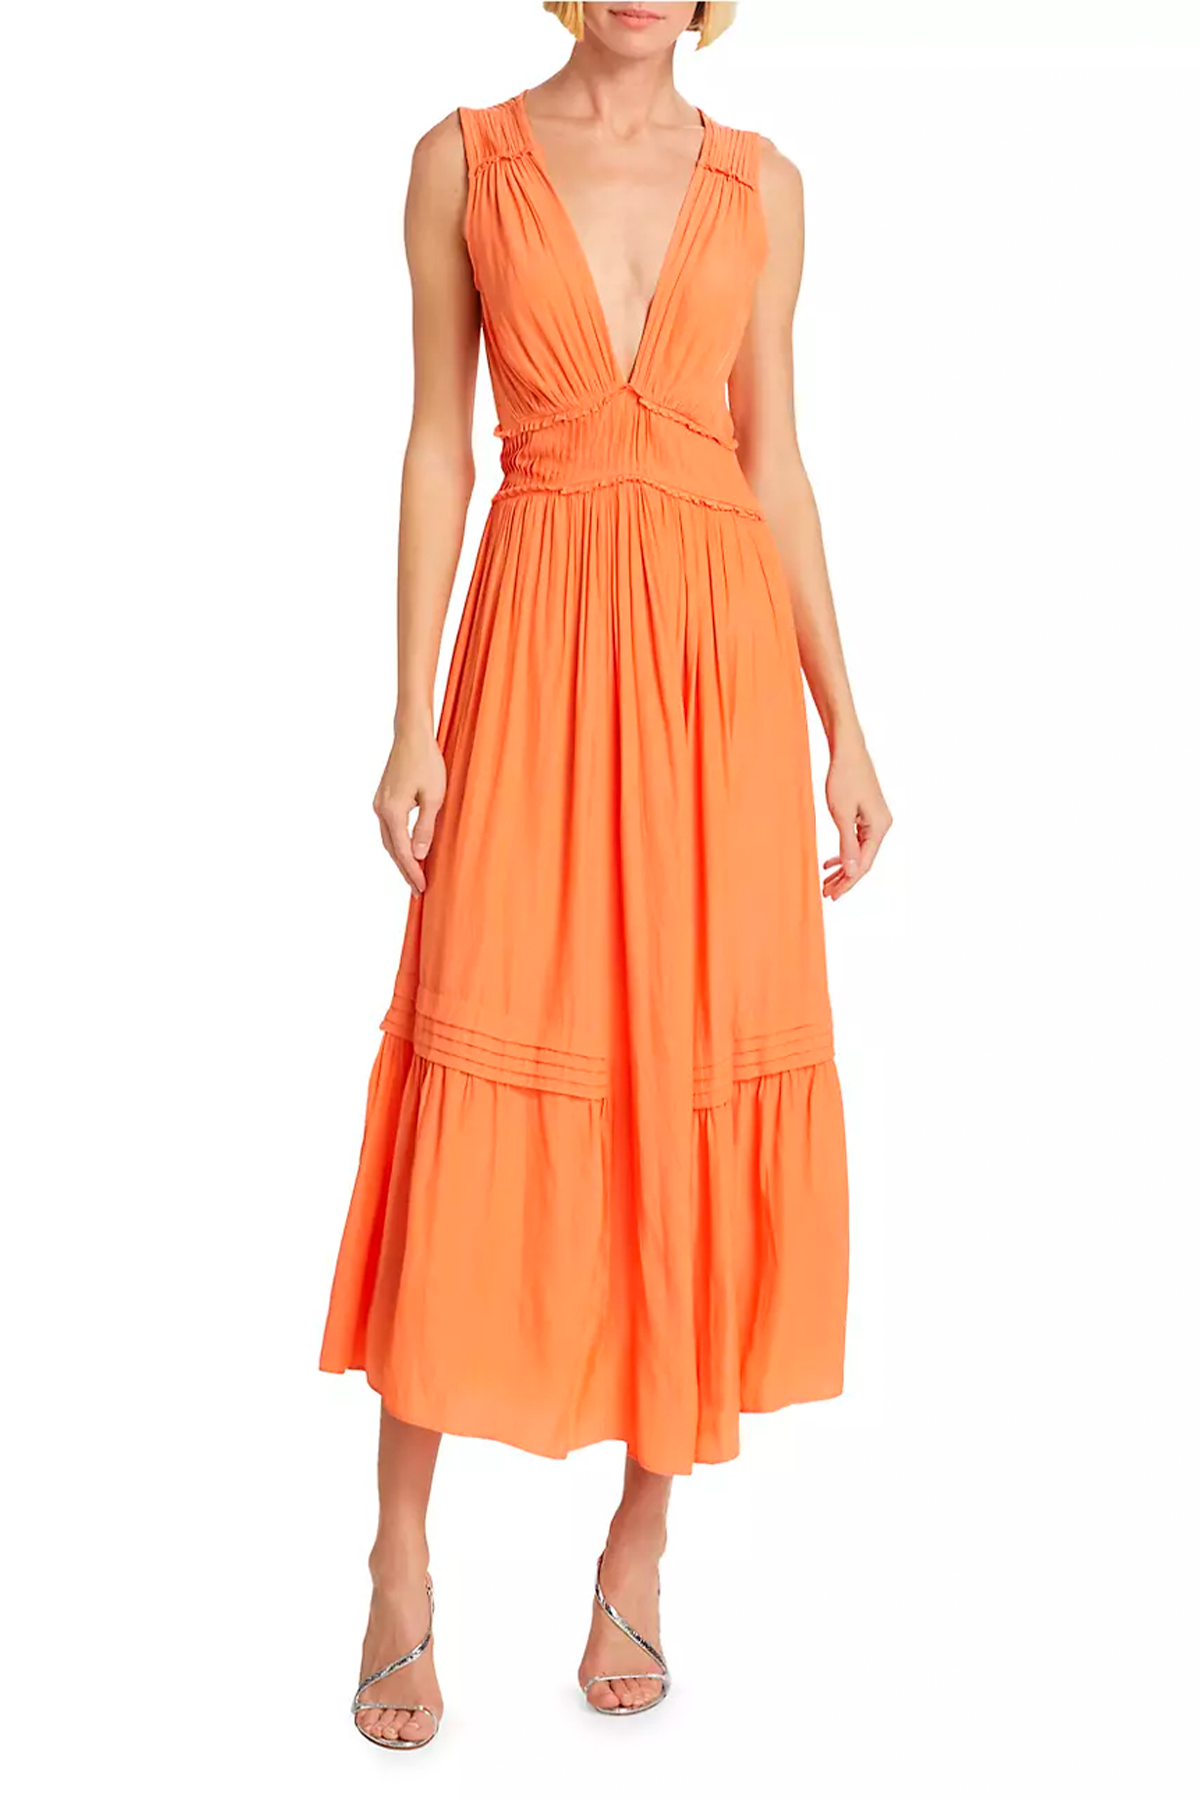 Ramy Brook Dierdre Tropic Orange Maxi Dress